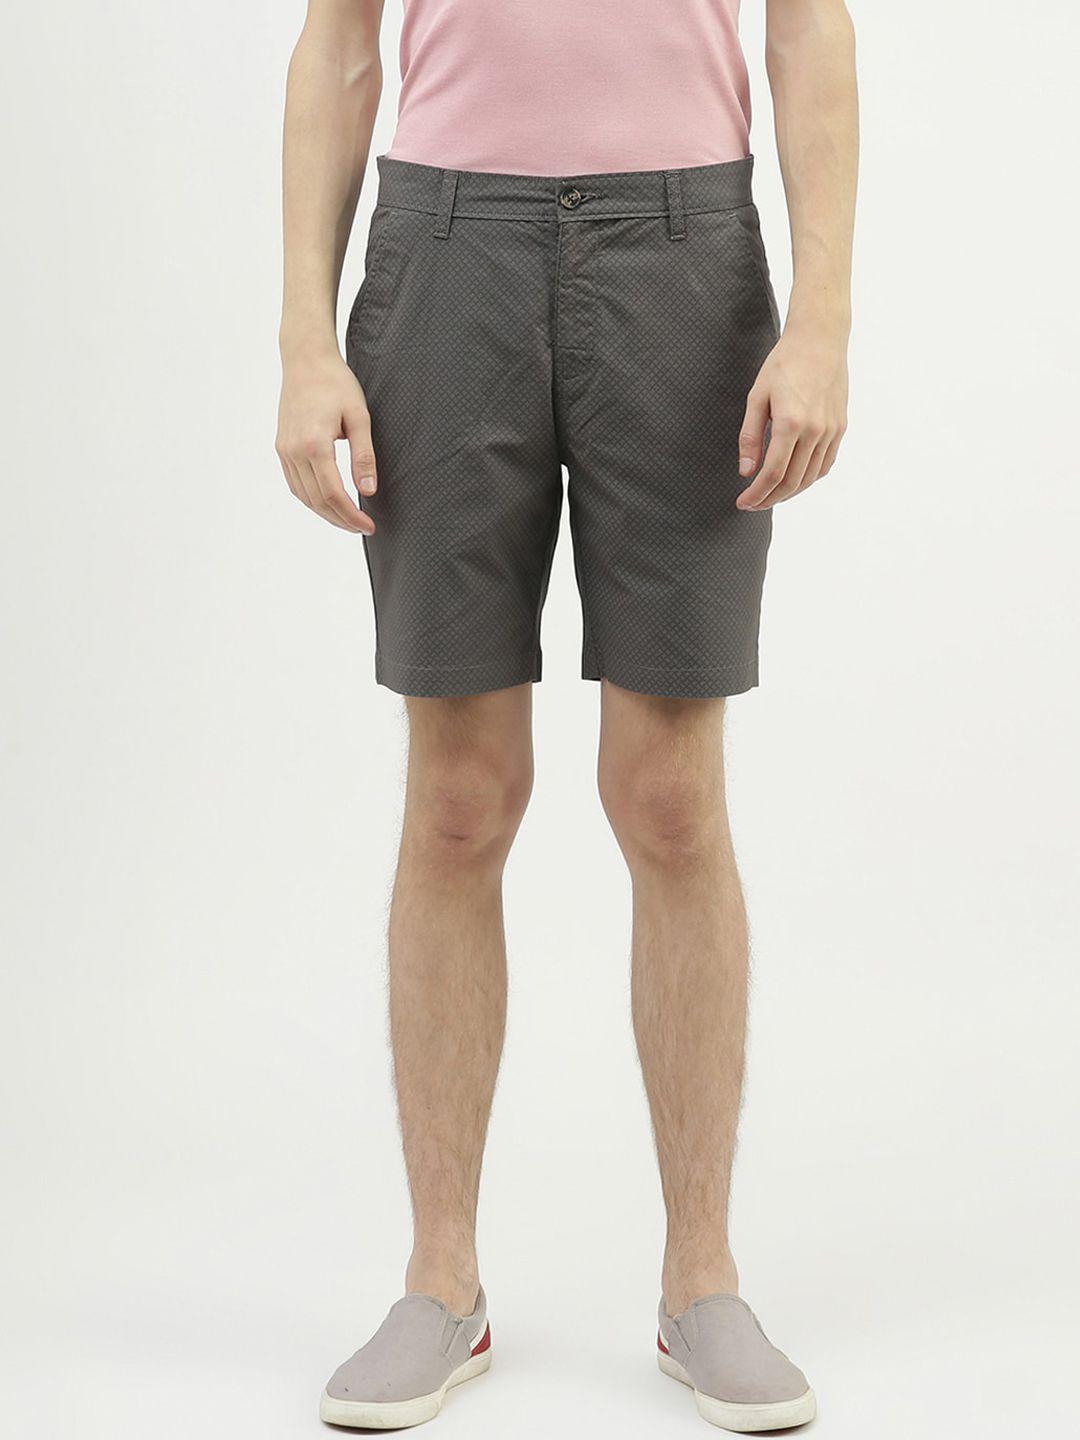 united-colors-of-benetton-men-printed-slim-fit-cotton-shorts